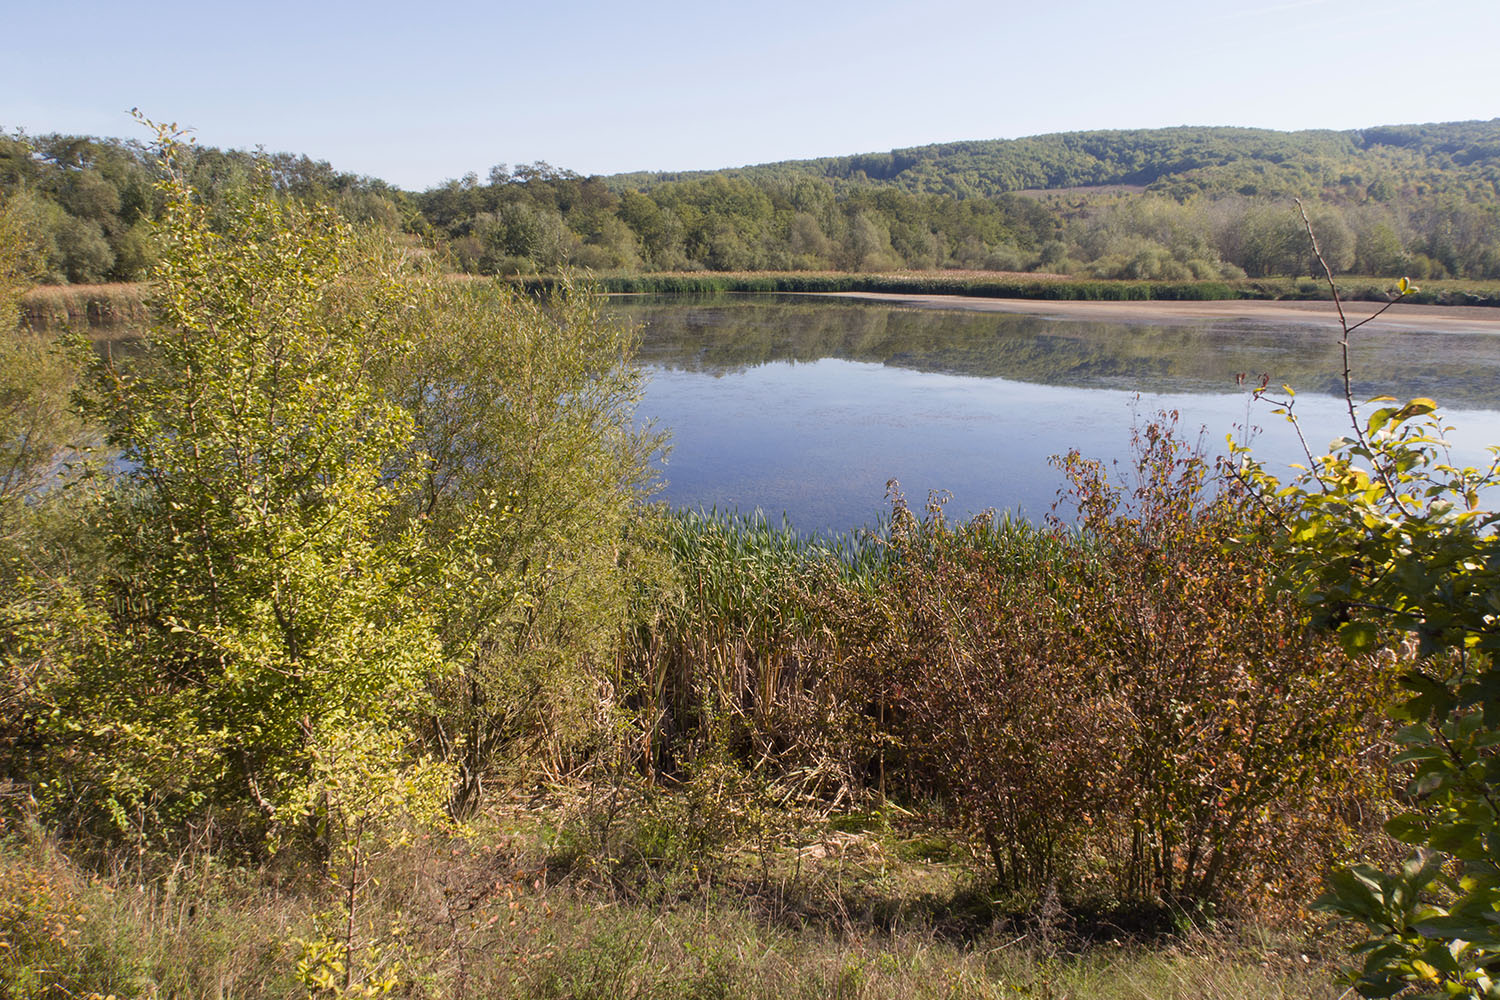 Шибик, image of landscape/habitat.